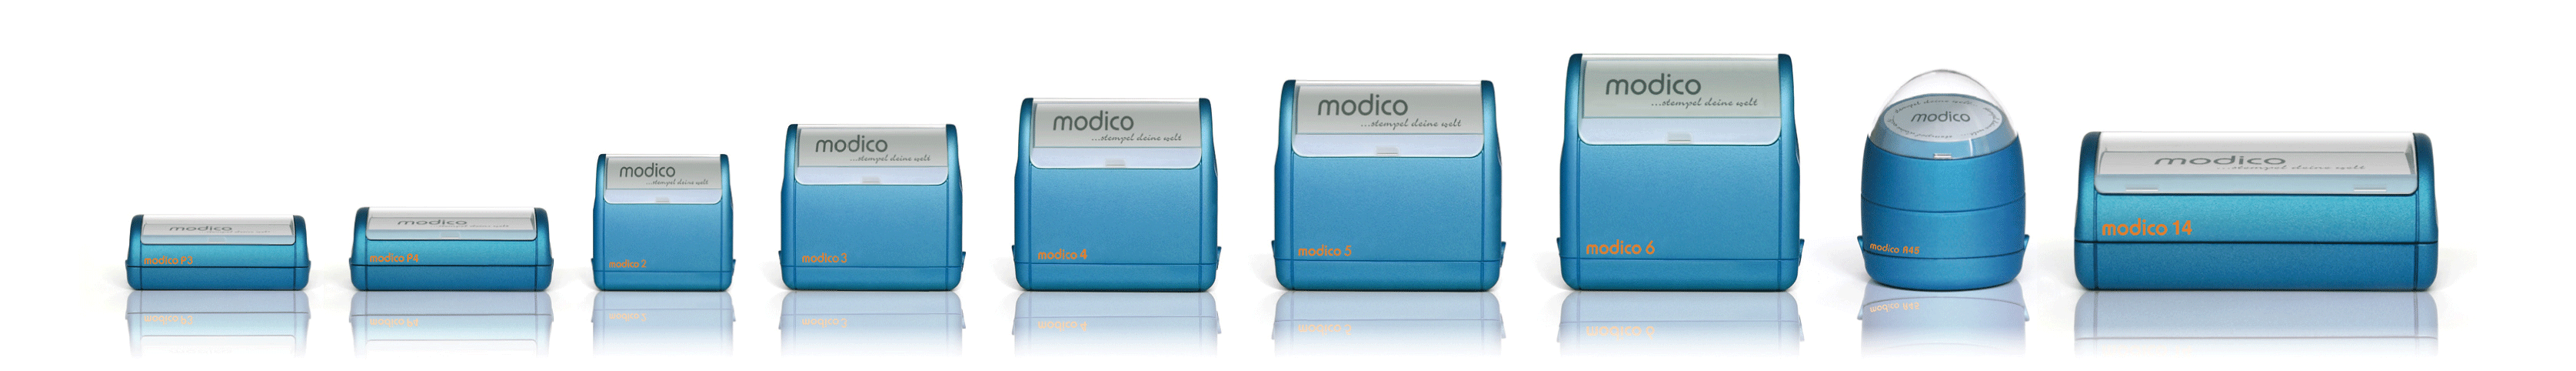 Modico stamp lineup